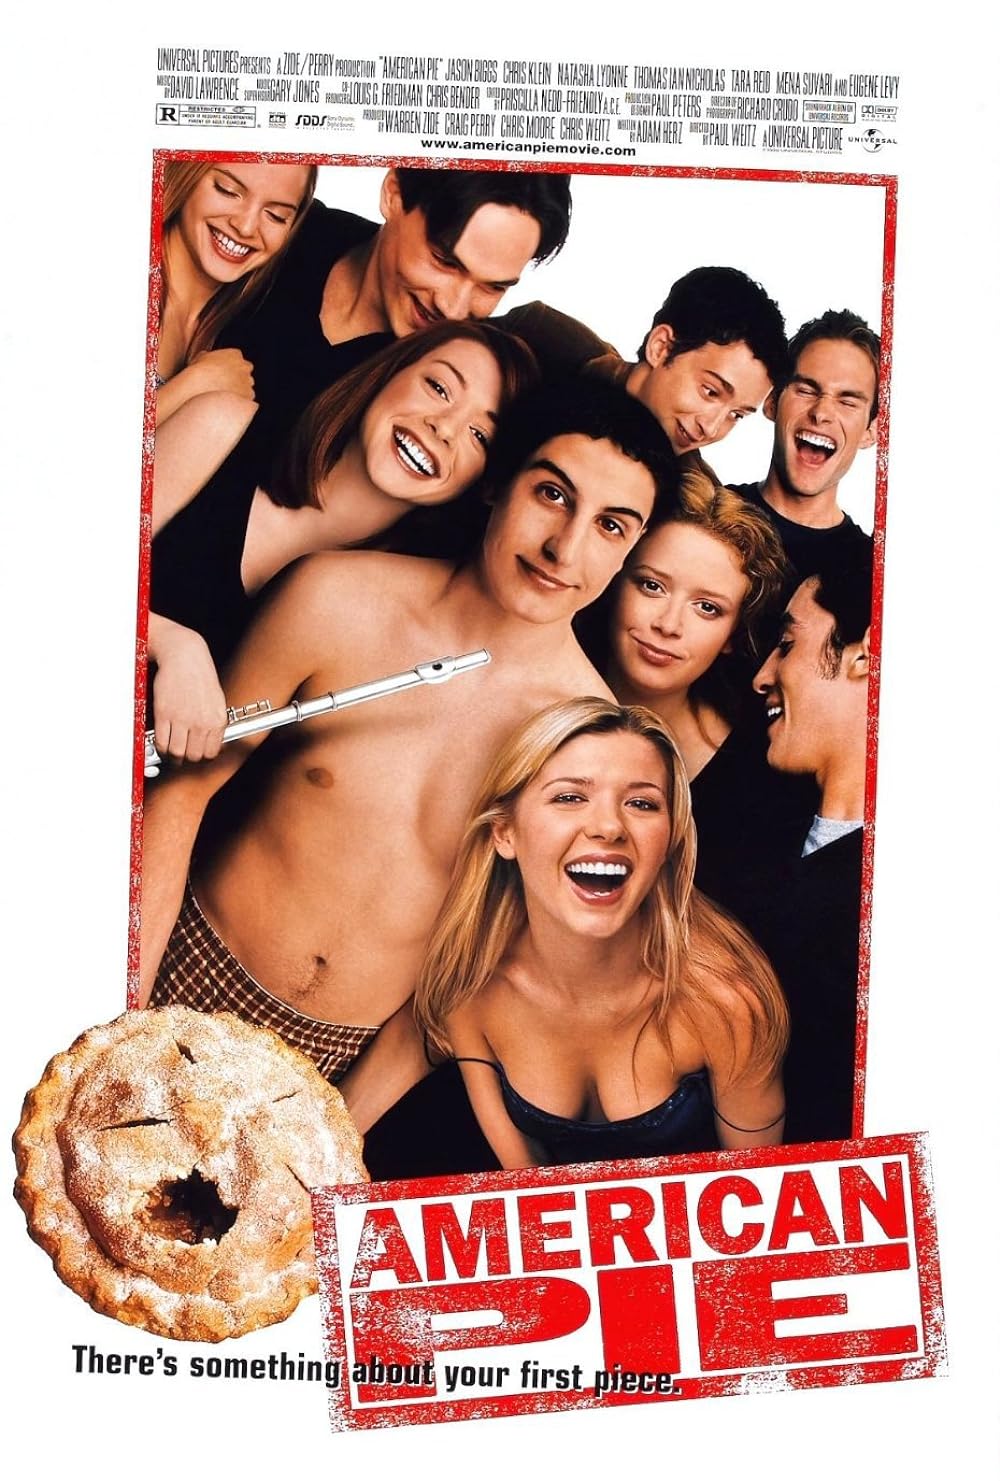 carol orosco recommends American Pie2 Watch Online